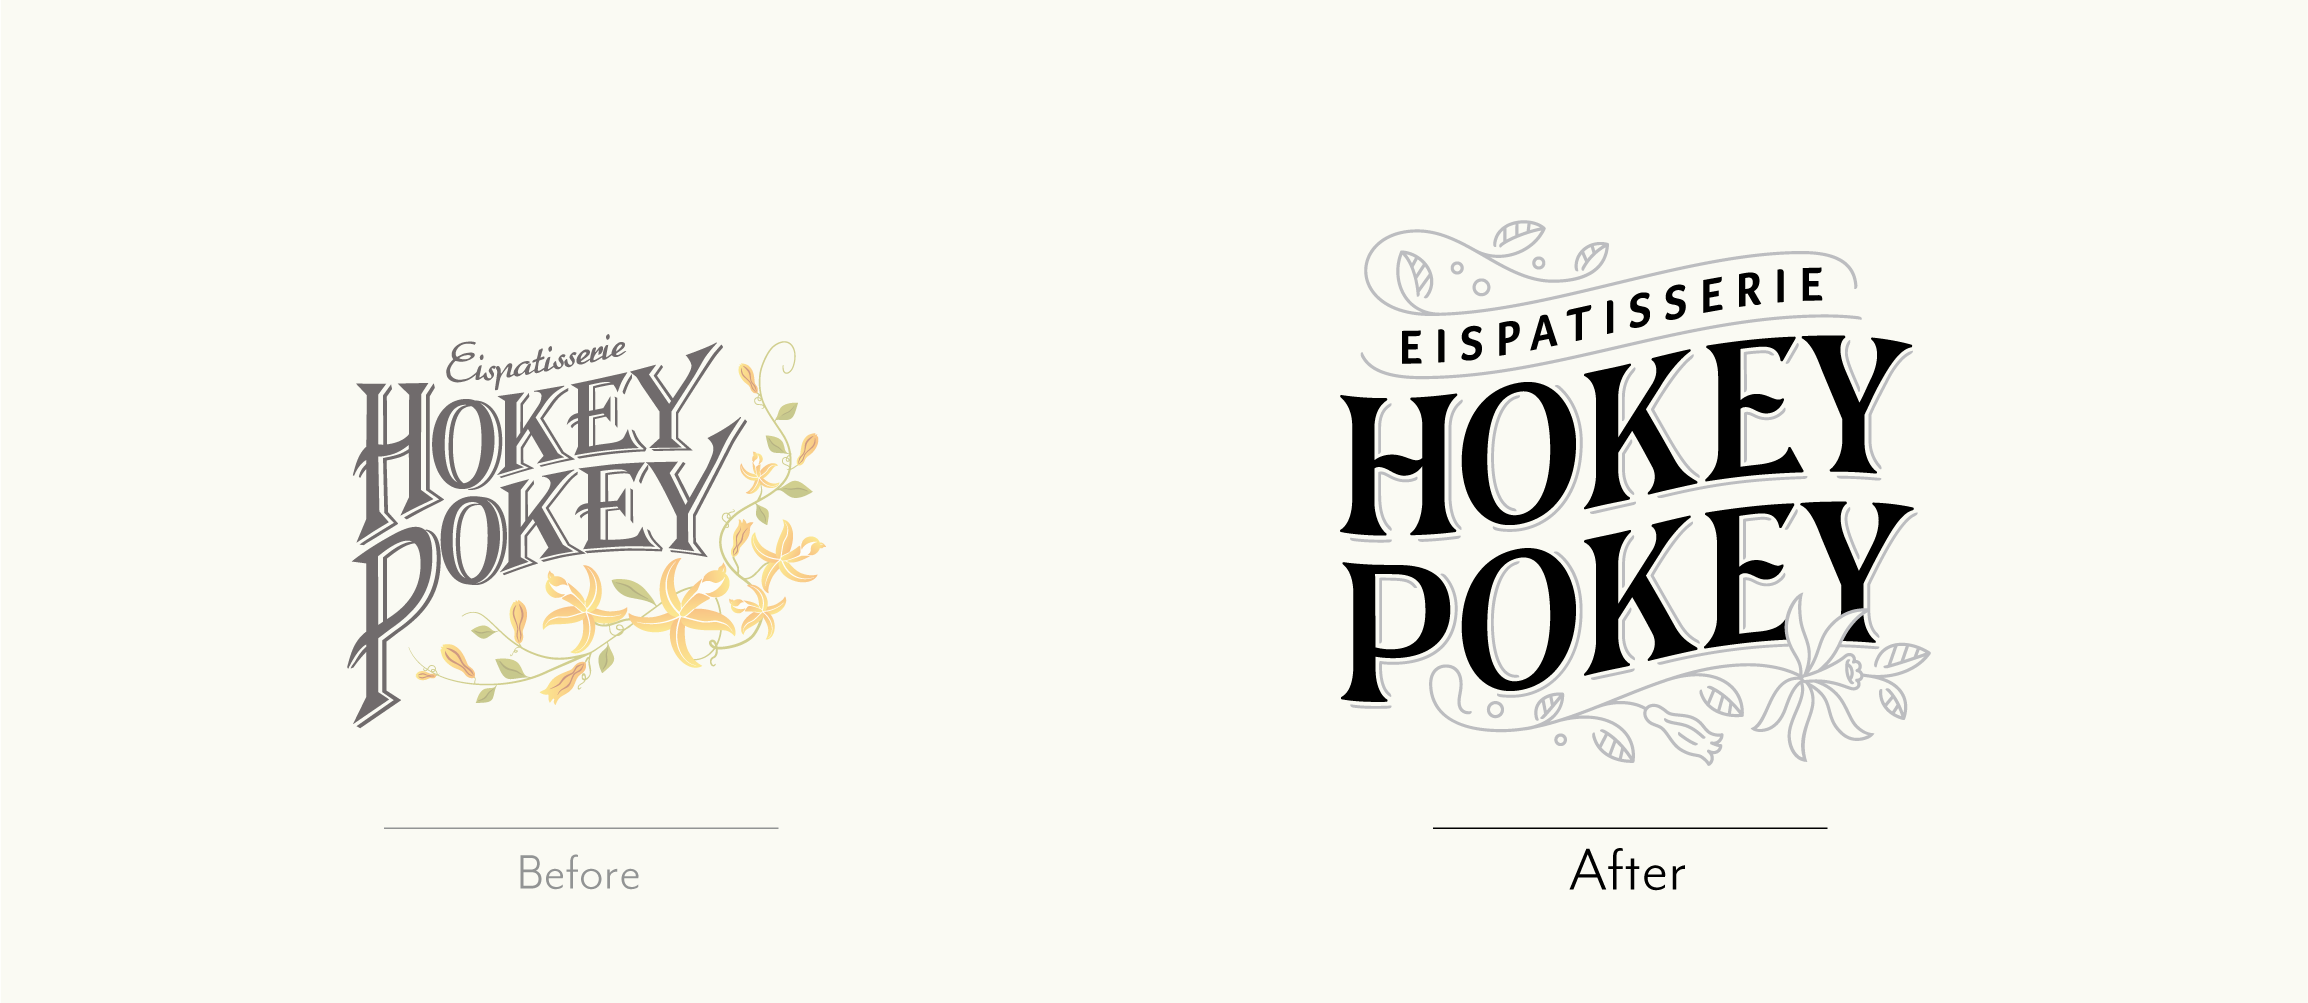 201104_HokeyPokey_Logotype_FINAL_socialmedia-11